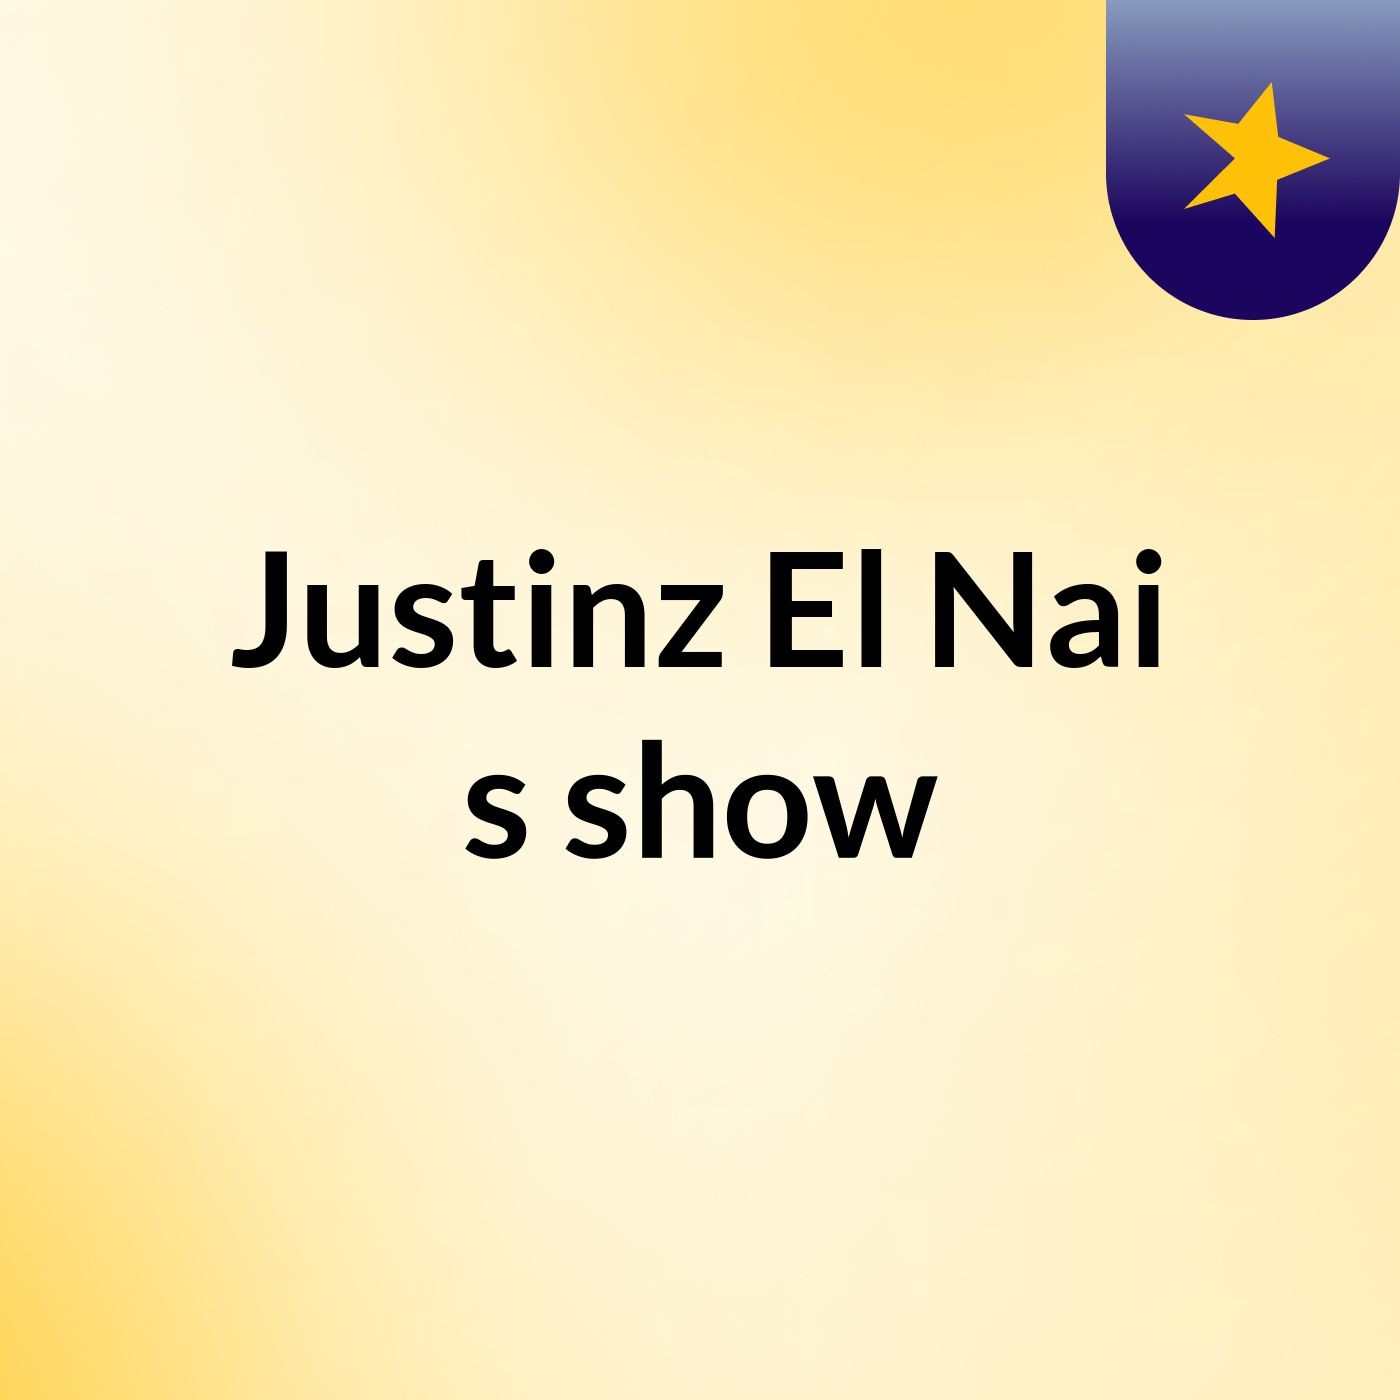 Justinz El Nai's show